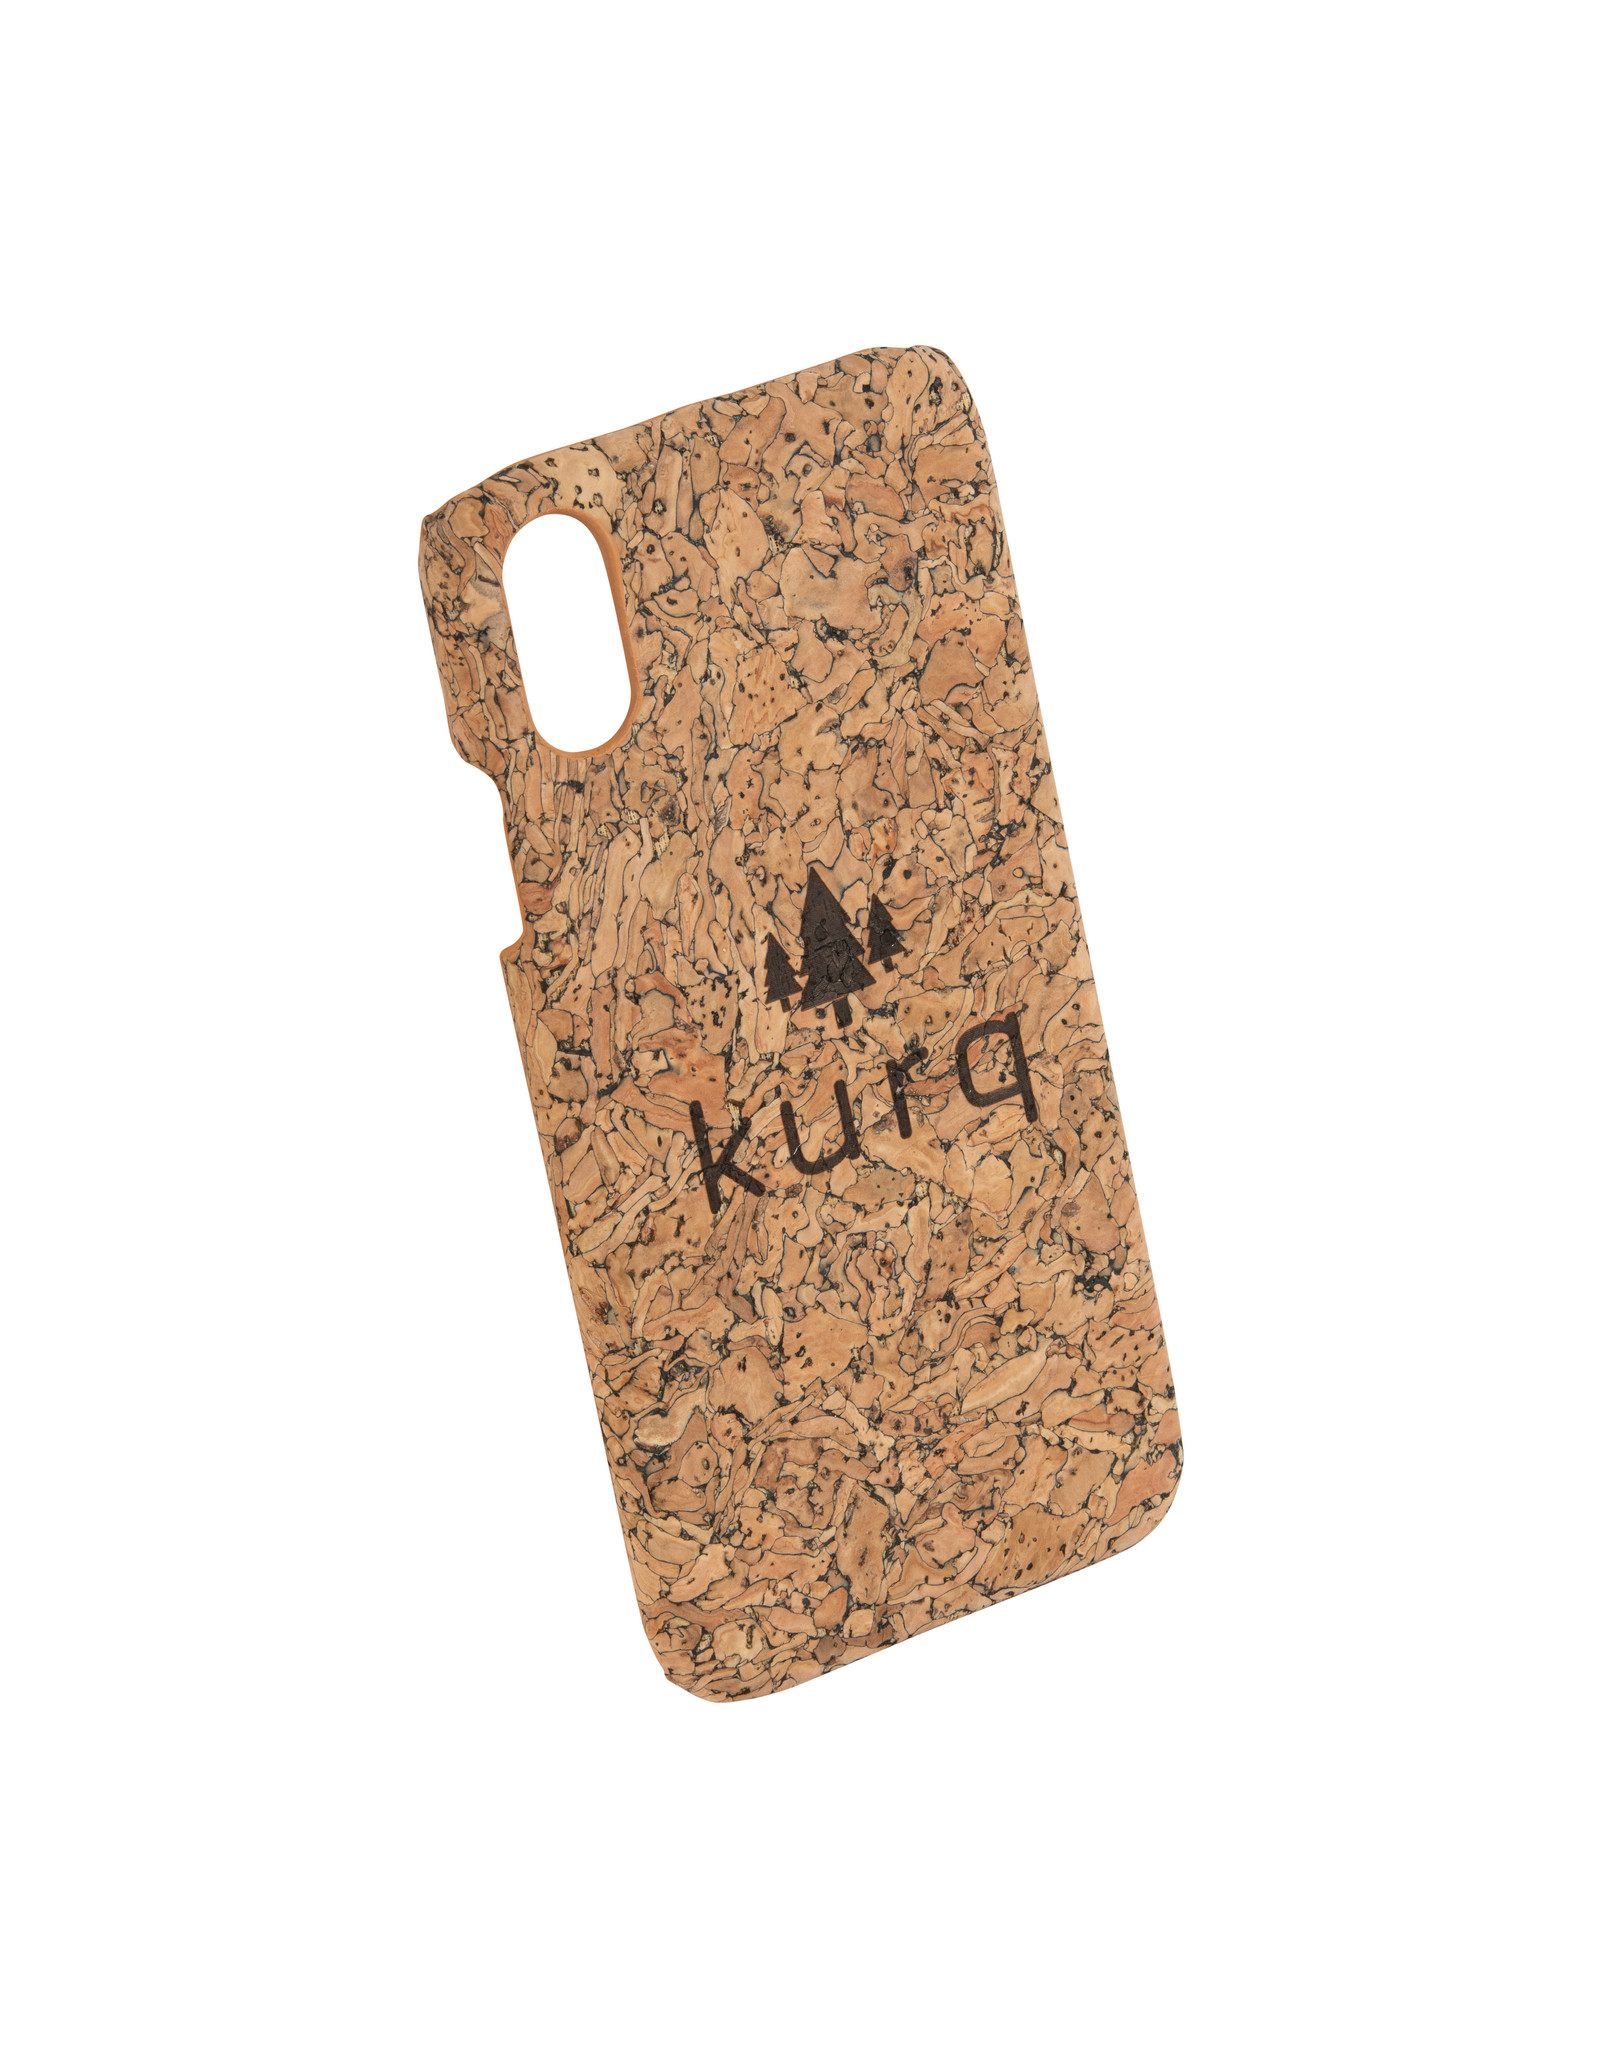 KURQ - Cork phone case for iPhone XR